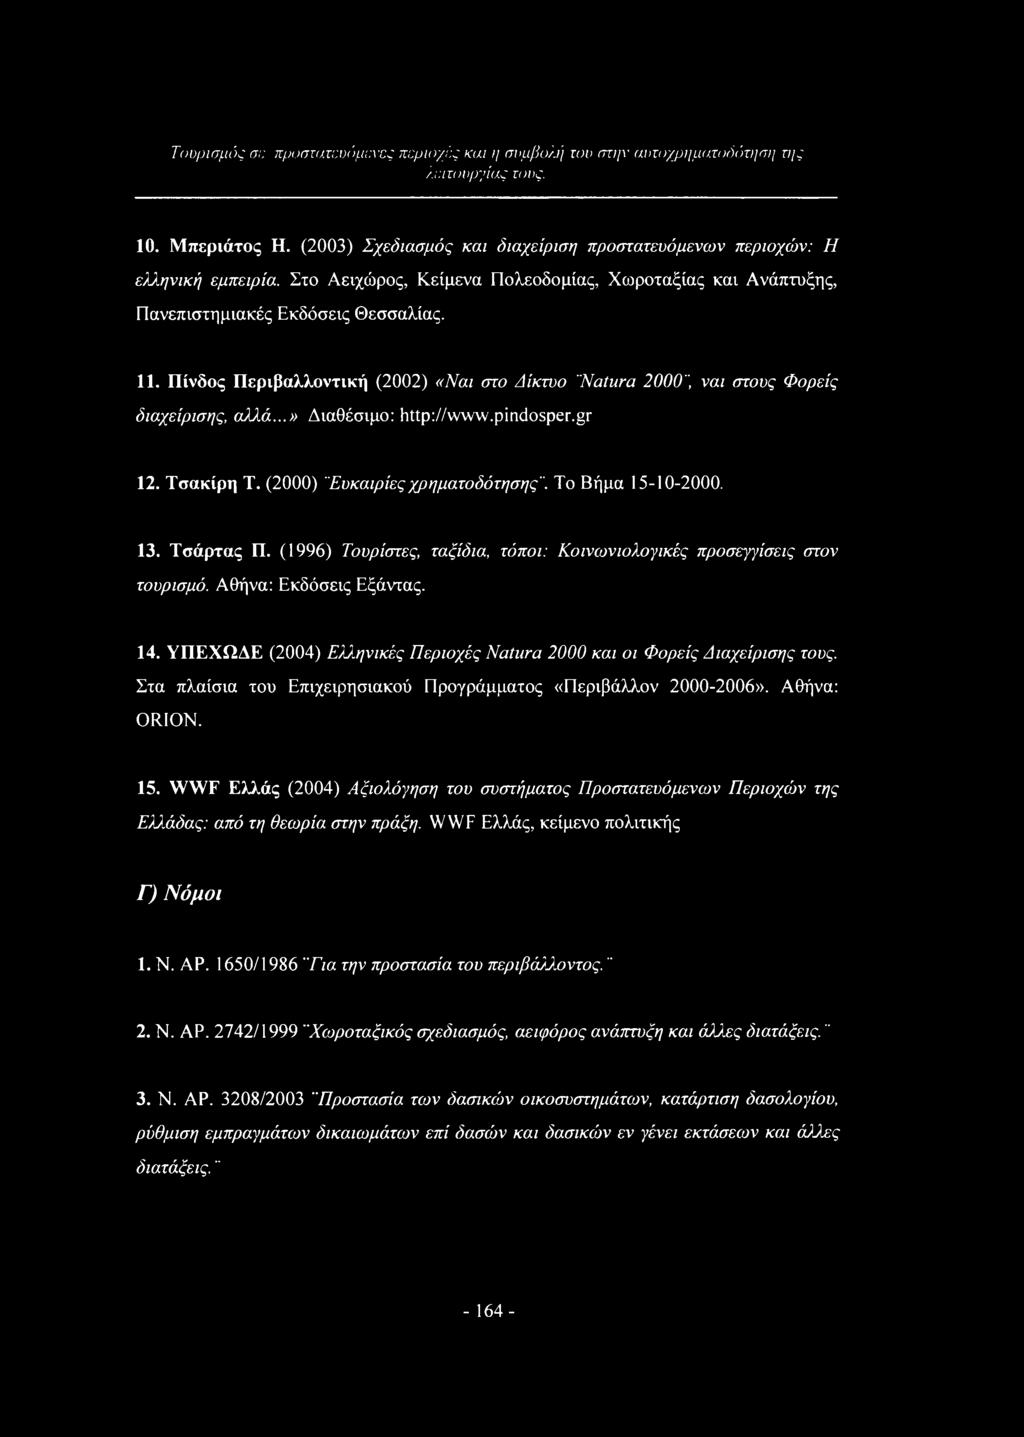 pindosper.gr 12. Τσακίρη Τ. (2000) "Ευκαιρίεςχρηματοδότησης". Το Βήμα 15-10-2000. 13. Τσάρτας Π. (1996) Τουρίστες, ταξίδια, τόποι: Κοινωνιολογικές προσεγγίσεις στον τουρισμό. Αθήνα: Εκδόσεις Εξάντας.